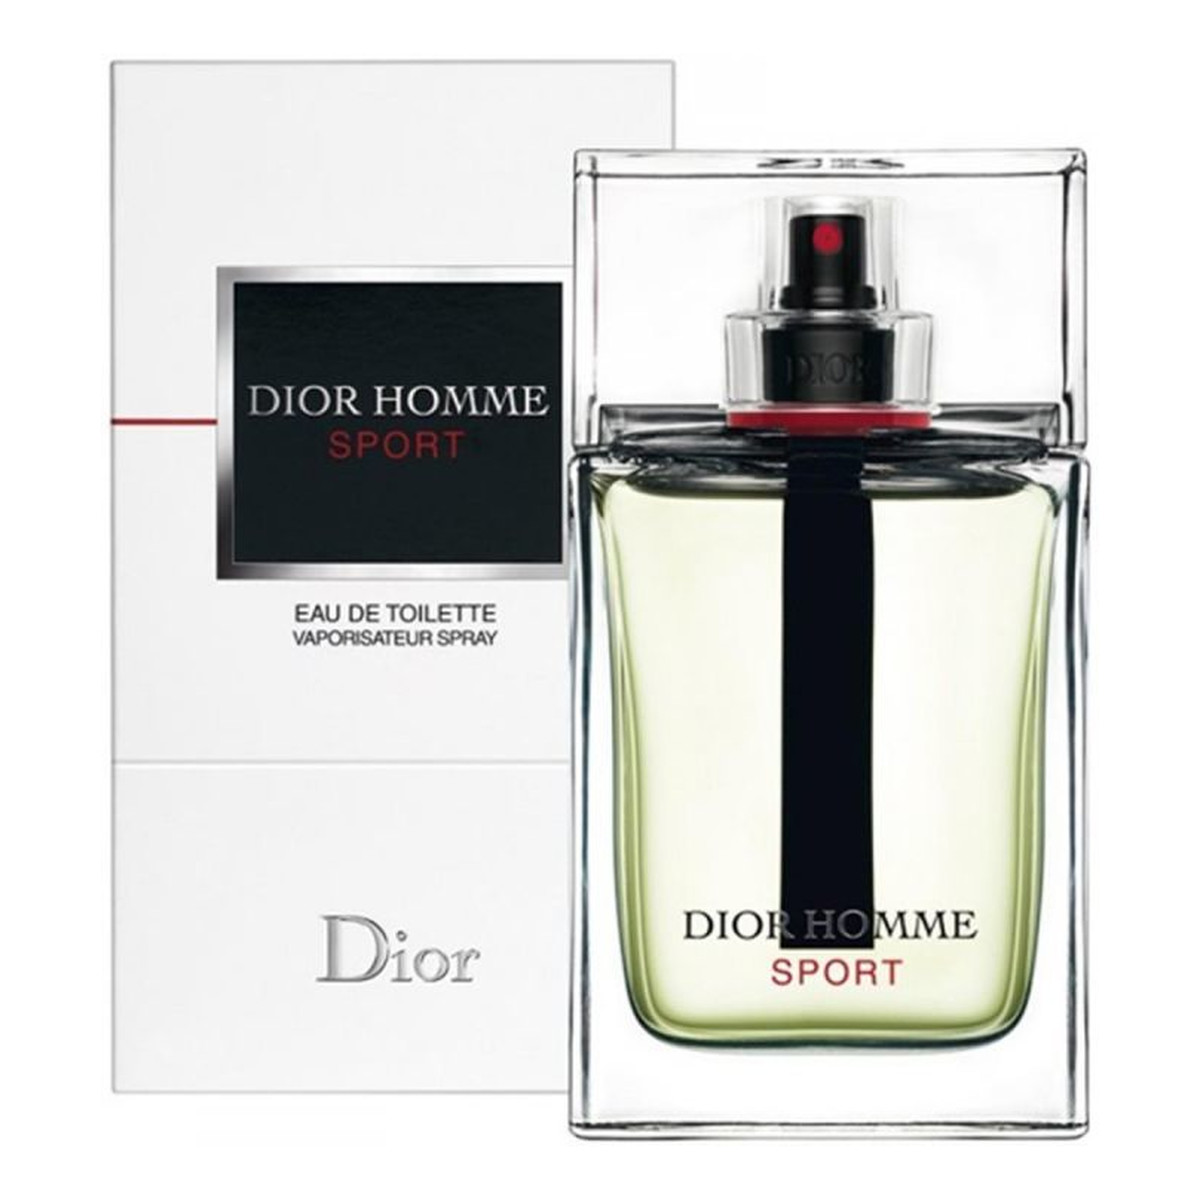 Dior Homme Sport woda toaletowa 125ml